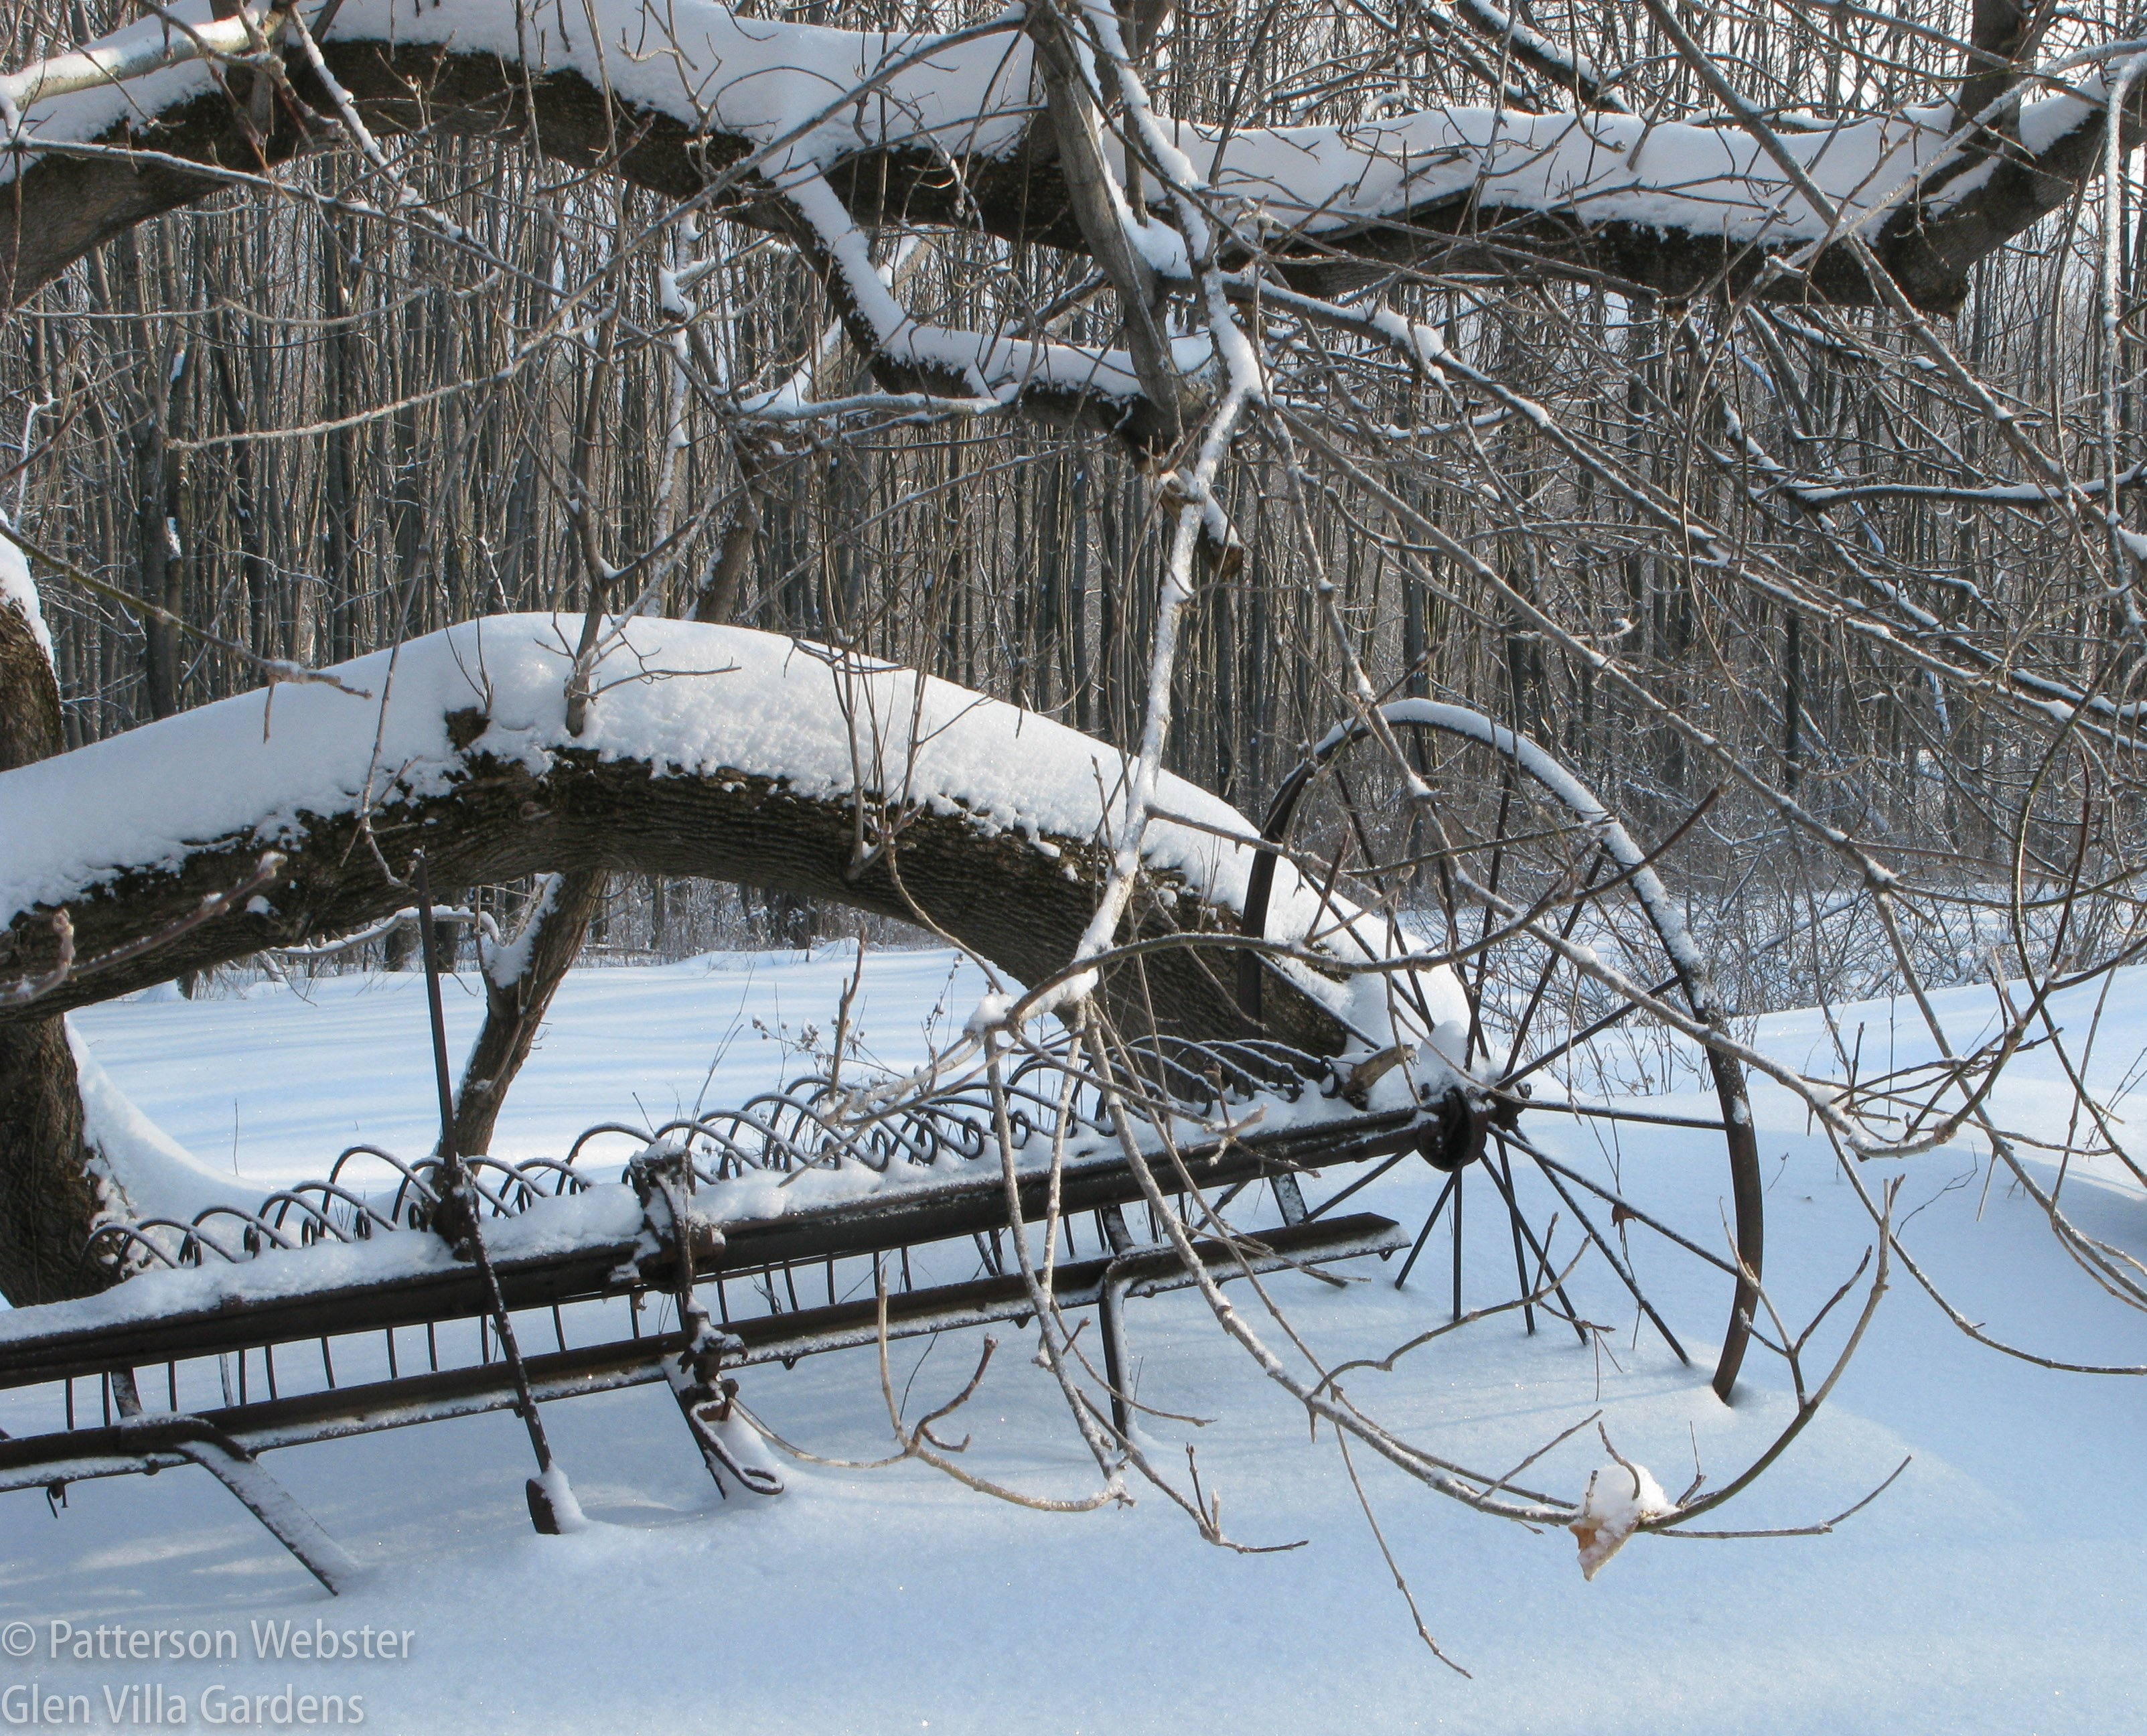 Old farm equipment acquires allure in the snow.